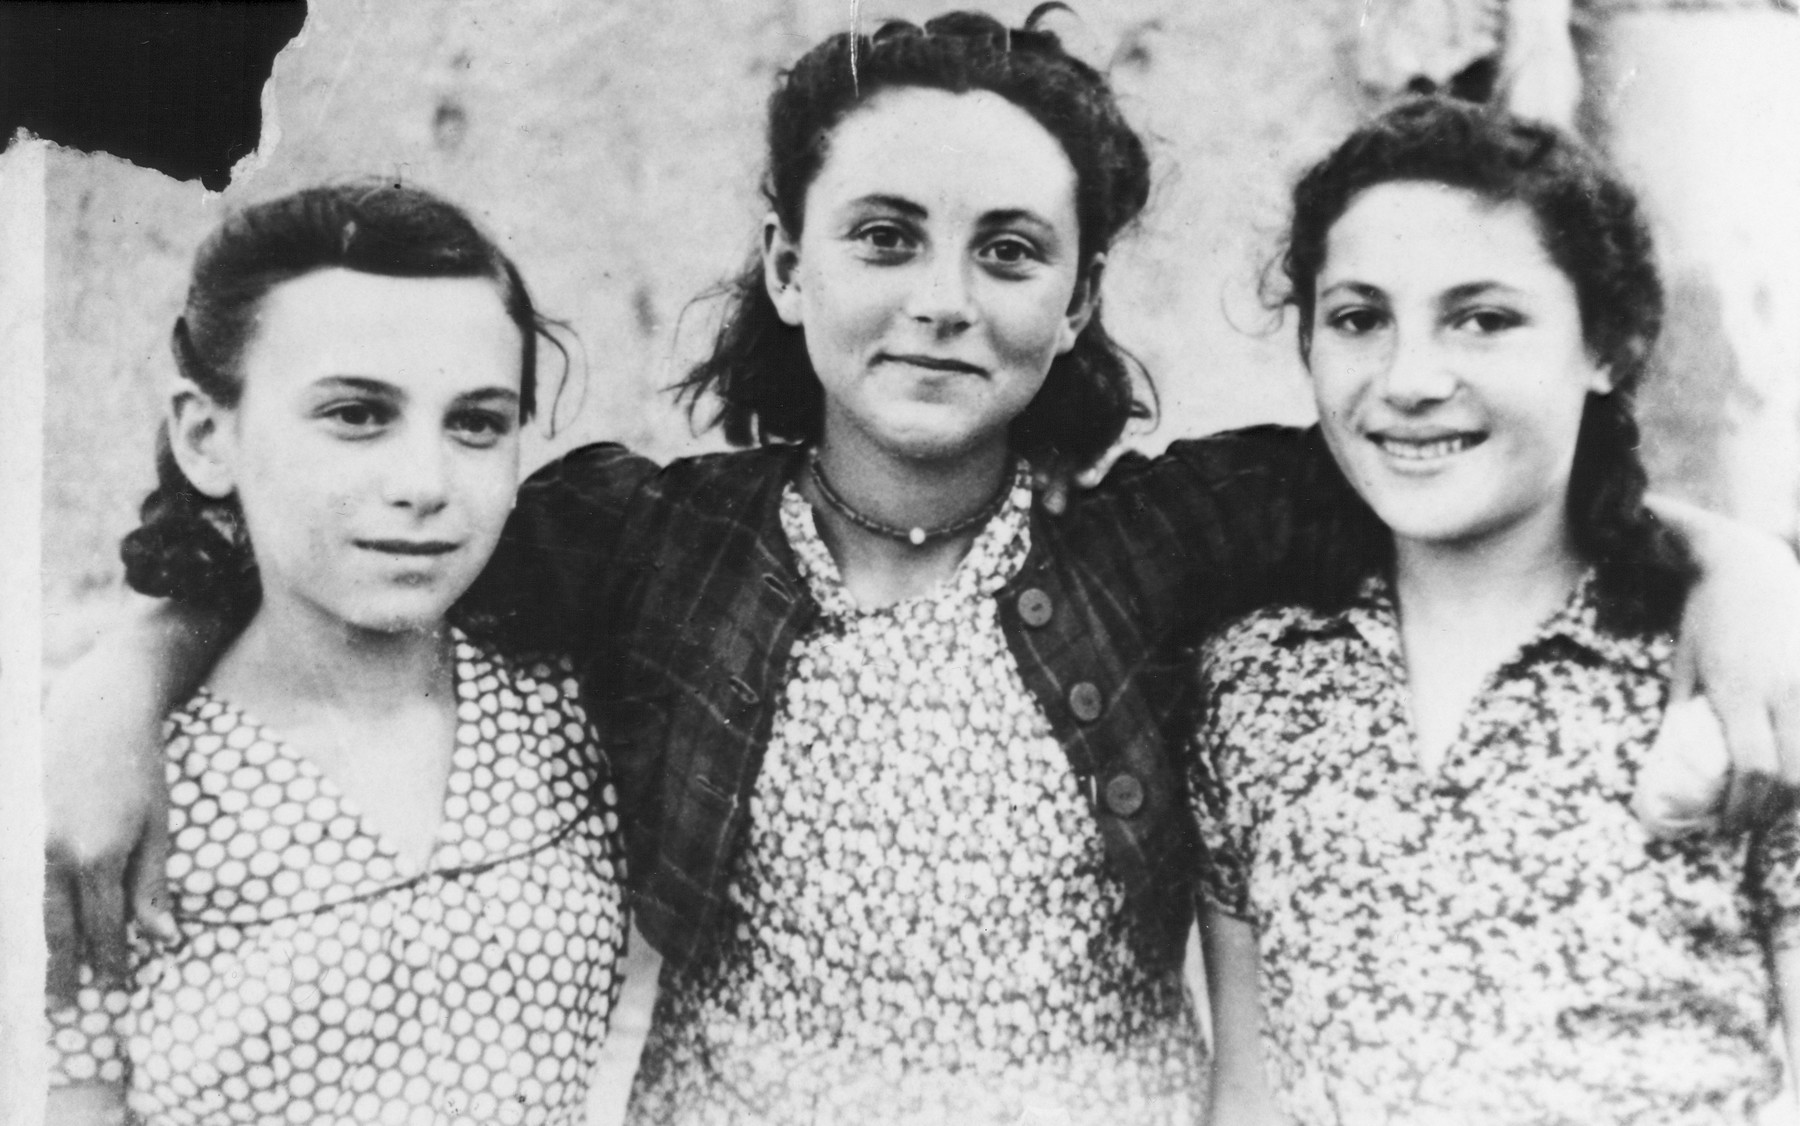 Portrait of three Jewish refugees in Uzbekistan.

Mira Stillman is pictured on the far left.